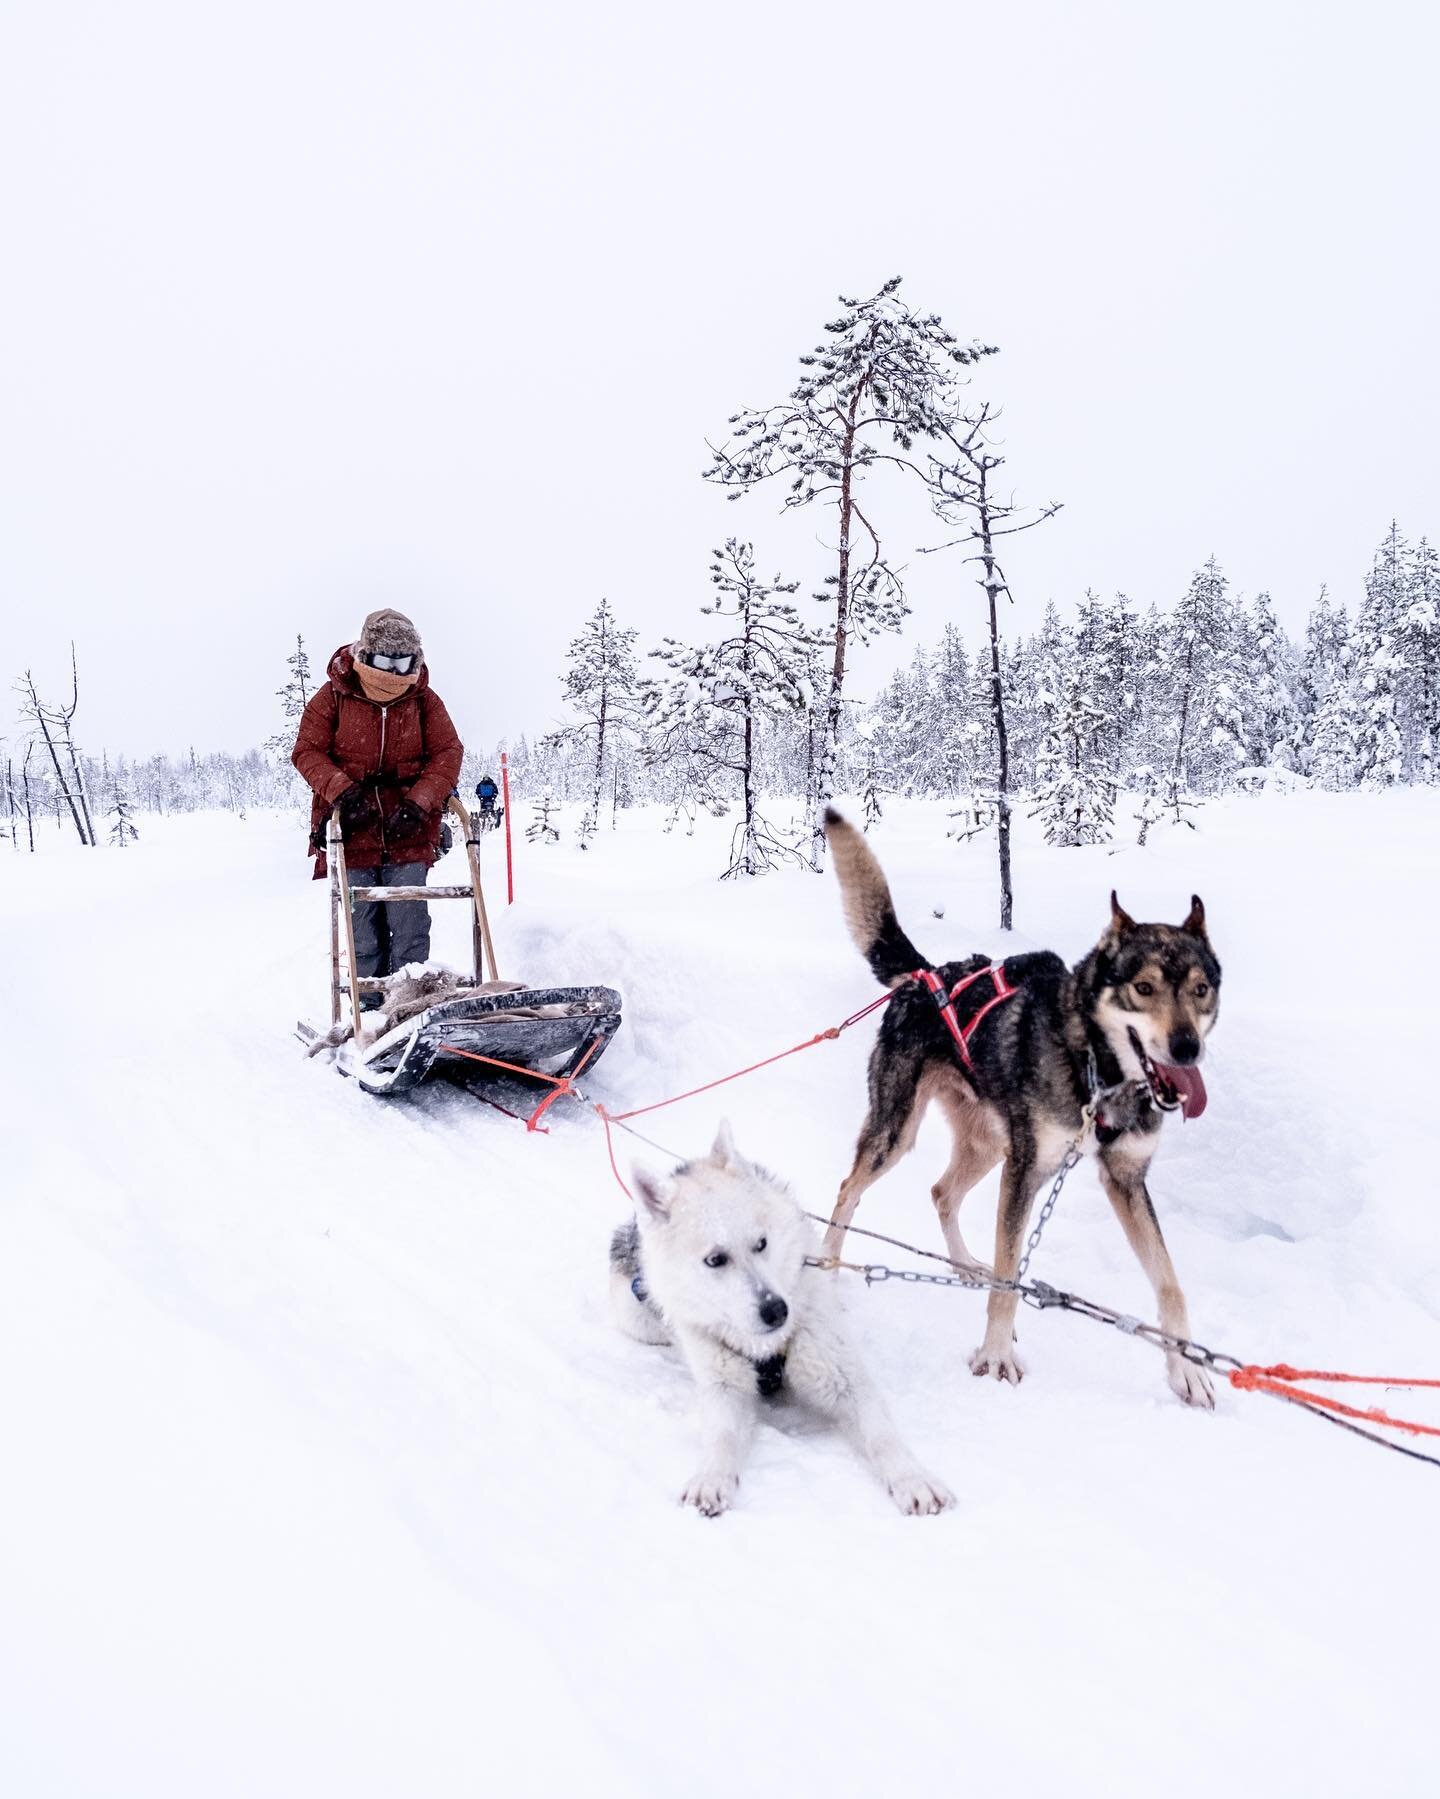 Dogsledding adventure Finland (2024)
.
.
.
.
.
#dogsledding #dogsleddingadventure #winteradventure #wintertime #winteroutdooractivity #winteroutdoor #finland #lapland #visitfinland #visitlapland #laplandtravel #laplandfinland #laplandadventures #pyh&